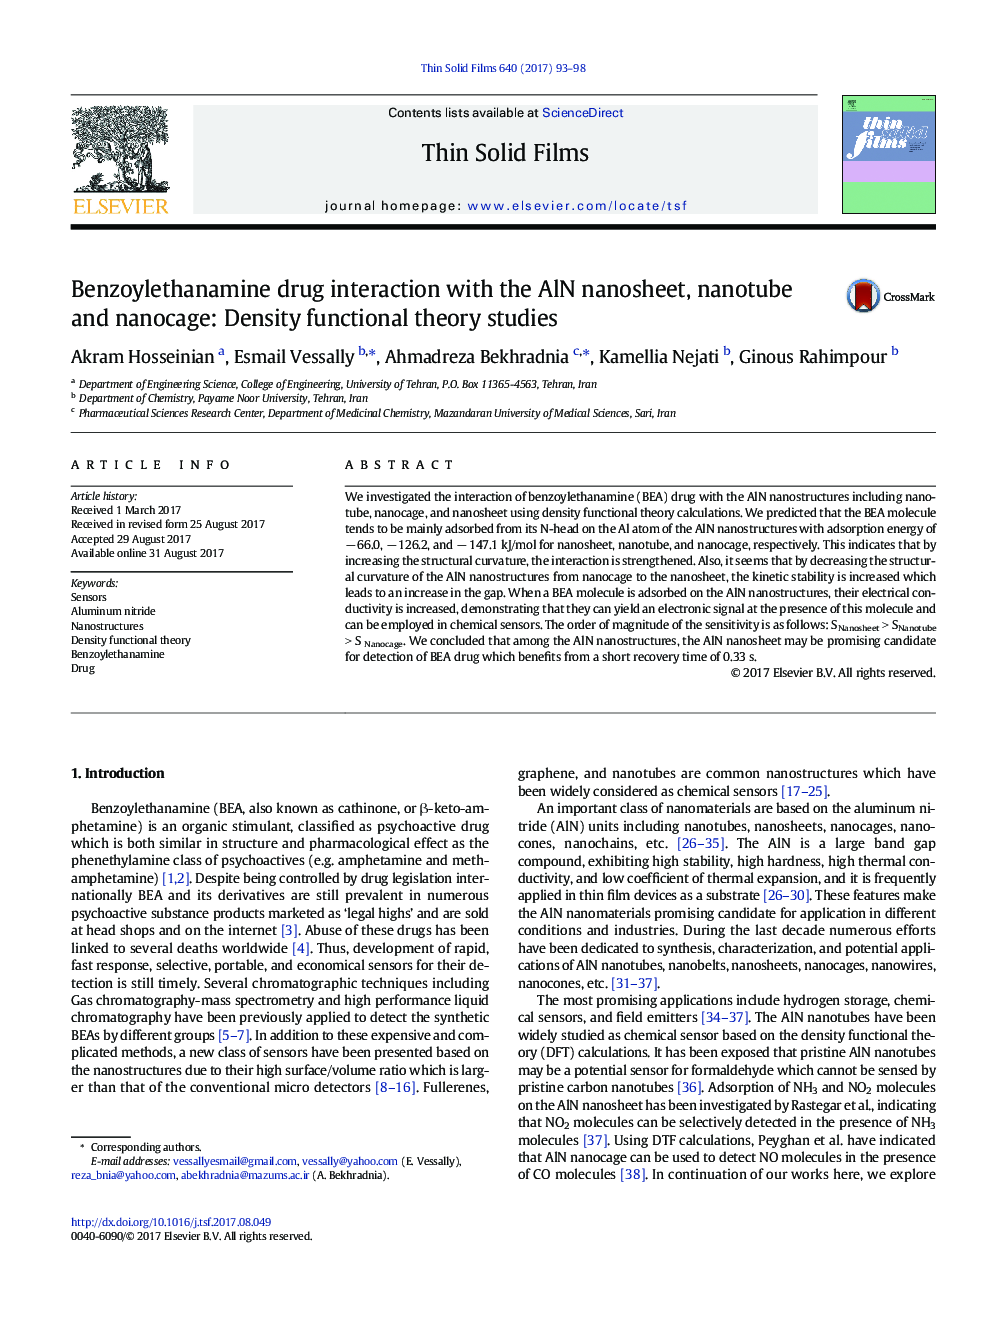 Benzoylethanamine drug interaction with the AlN nanosheet, nanotube and nanocage: Density functional theory studies